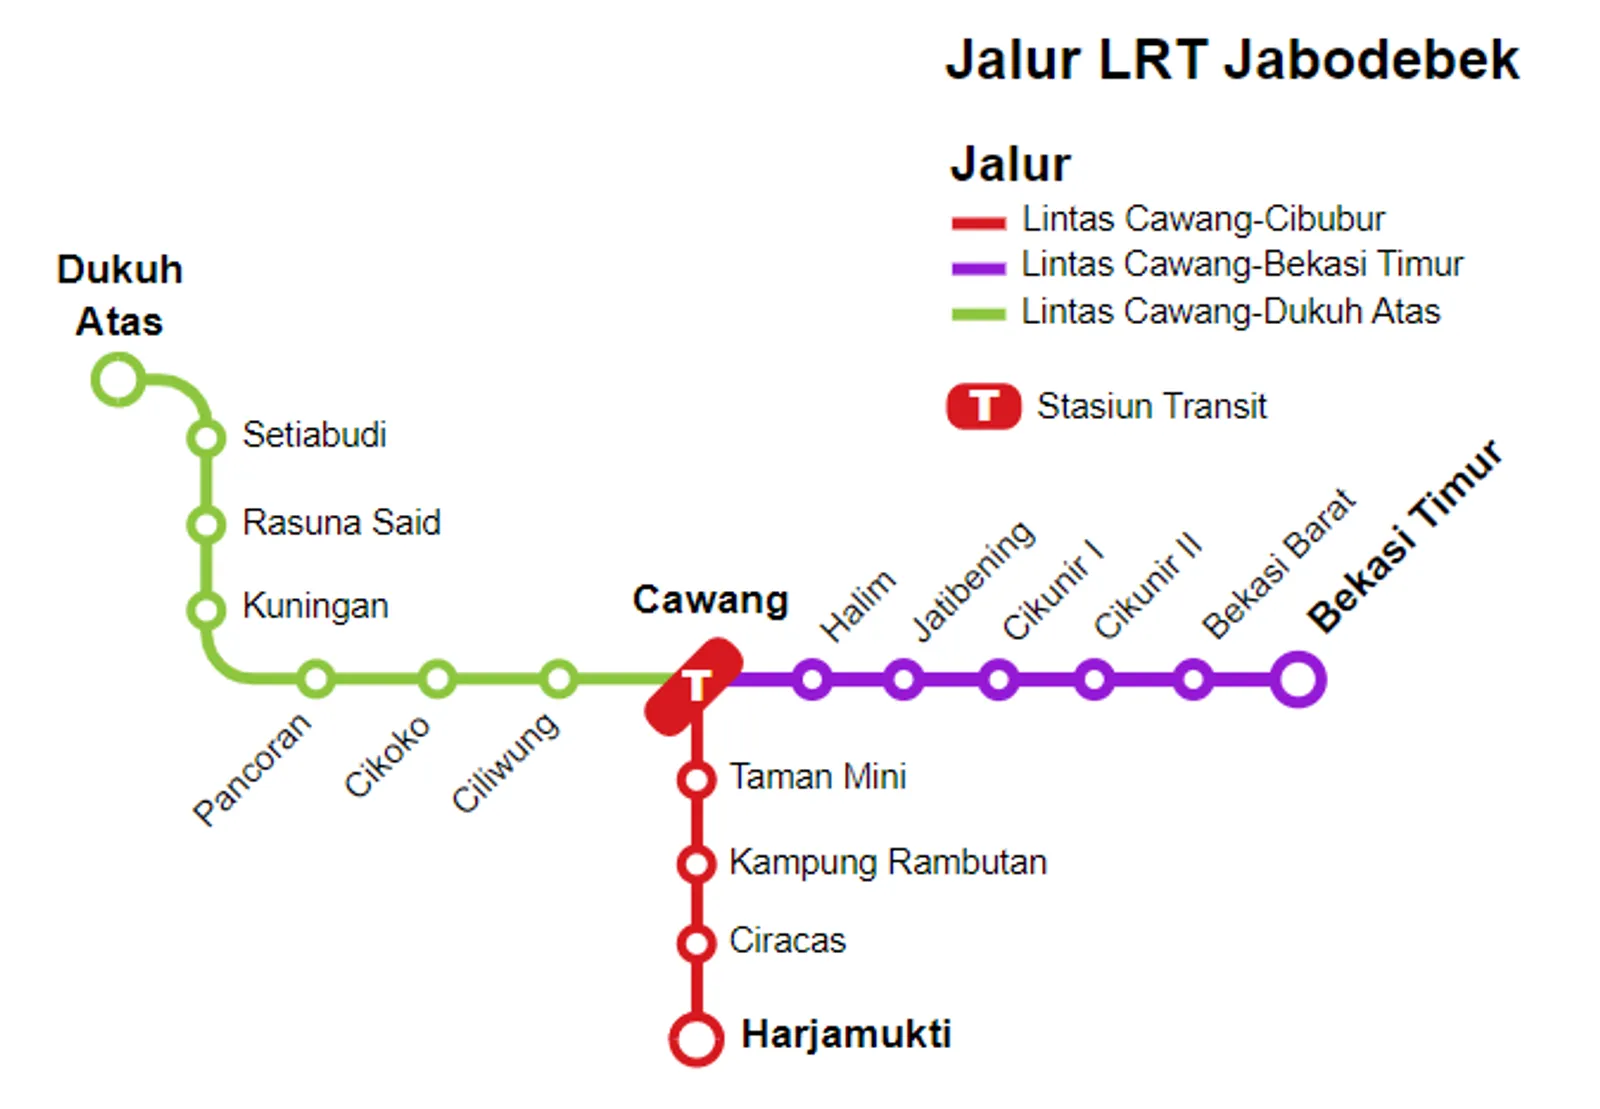 Rute dan Rencana Tarif LRT Jabodebek yang Segera Uji Coba